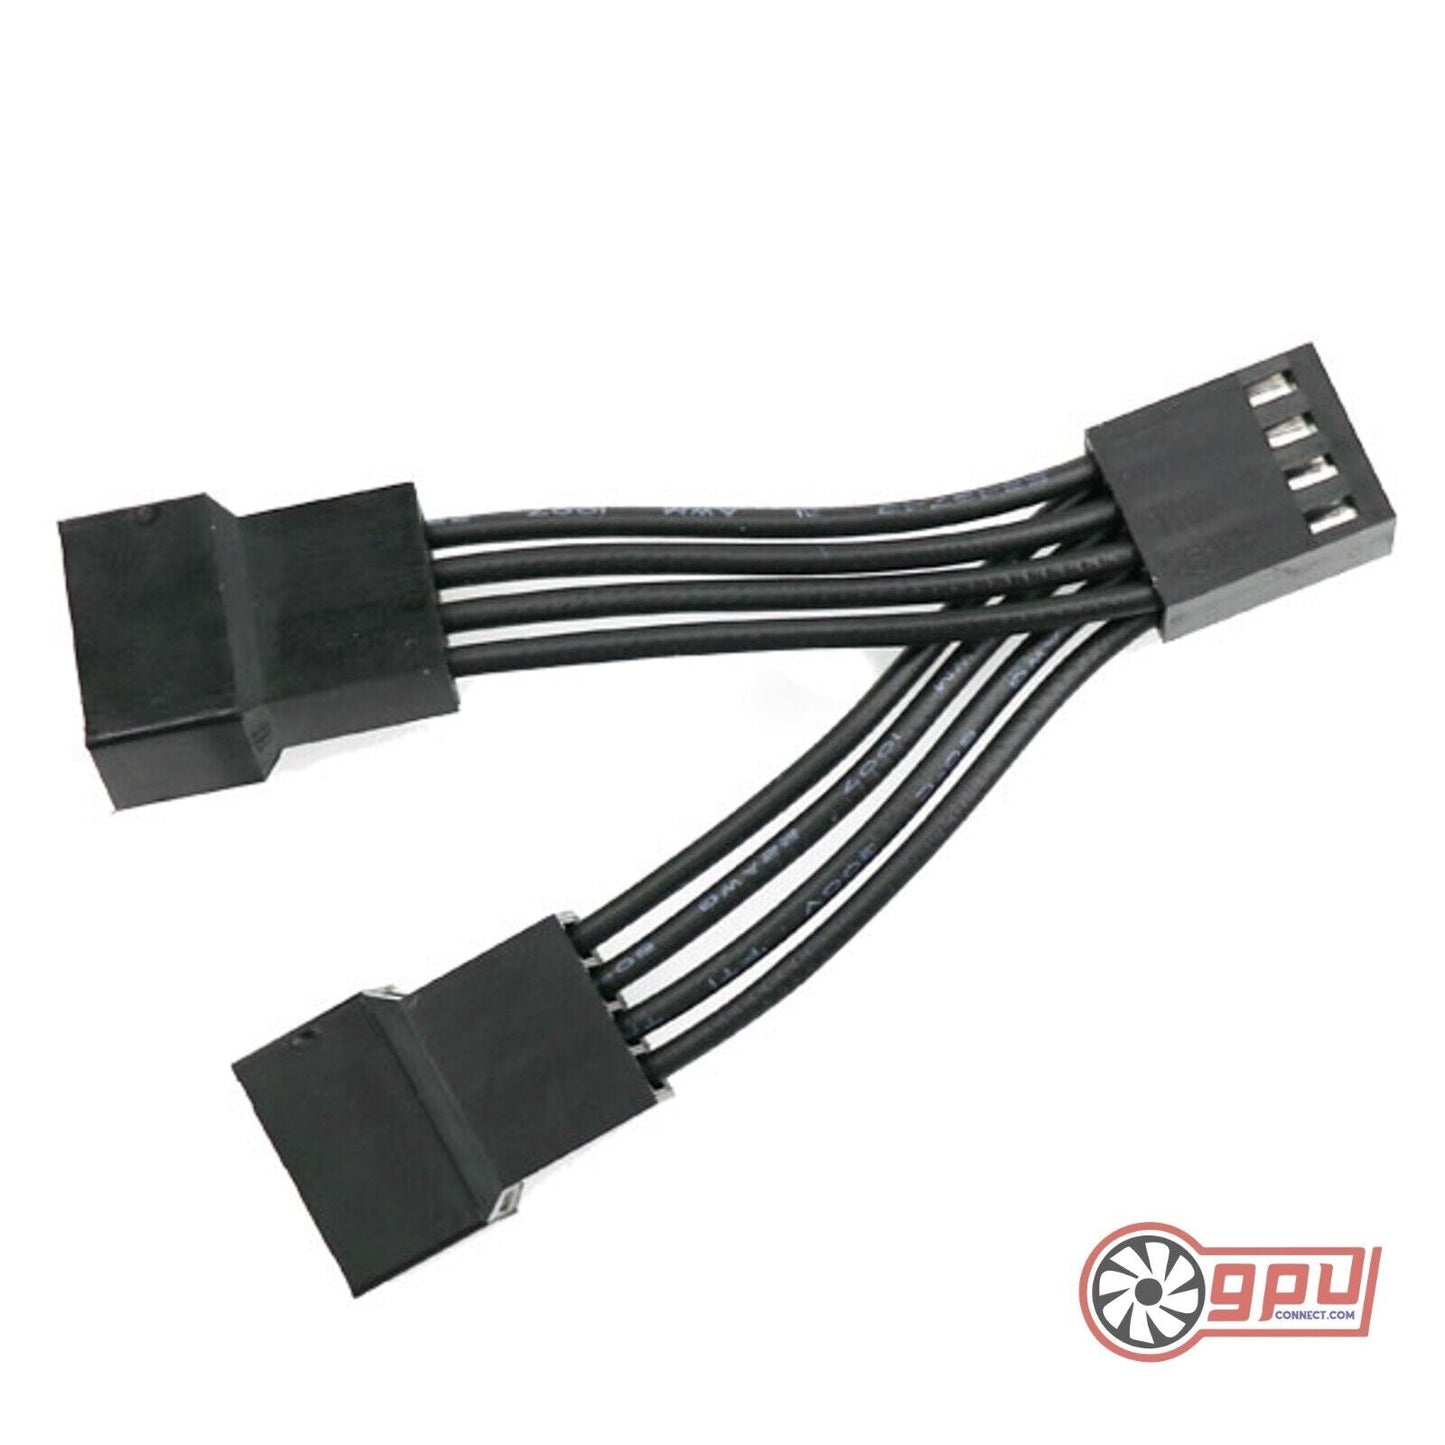 Mini Fan Splitter Cable Dual PWM for CPU / GPU - 5cm Black - GPUCONNECT.COM